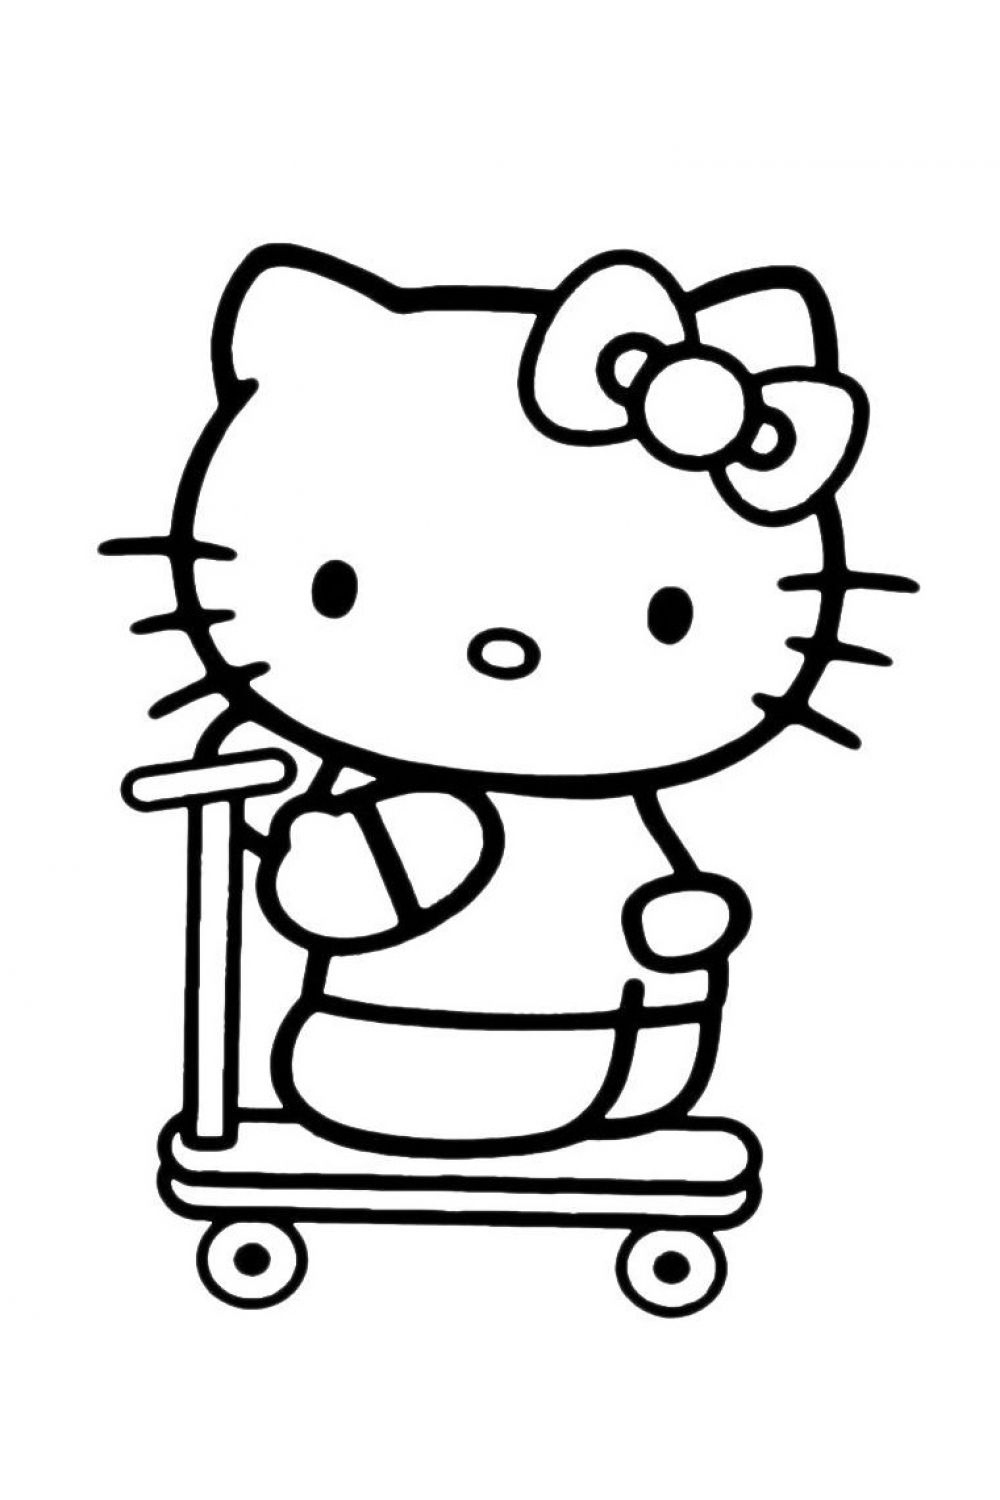 Coloriage Hello Kitty Imprimer